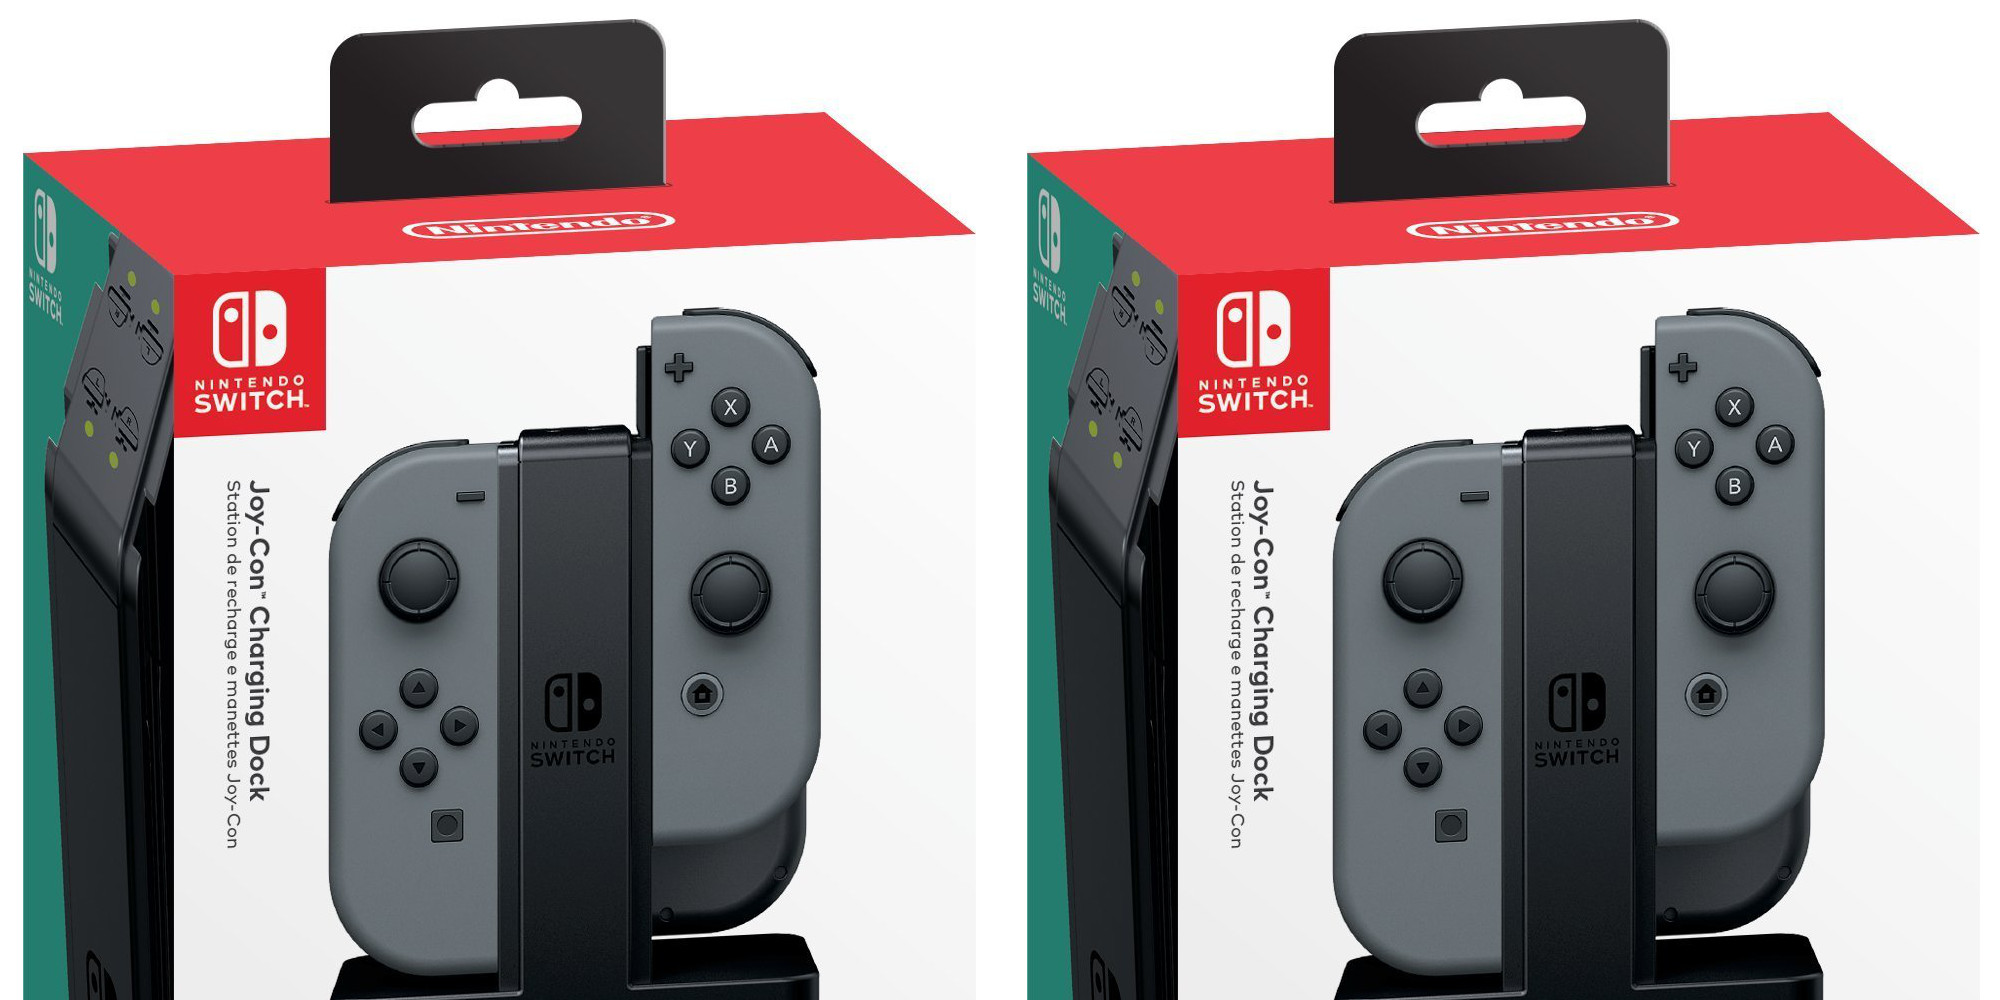 PowerA Joy-Con Charging Dock for Nintendo Switch 